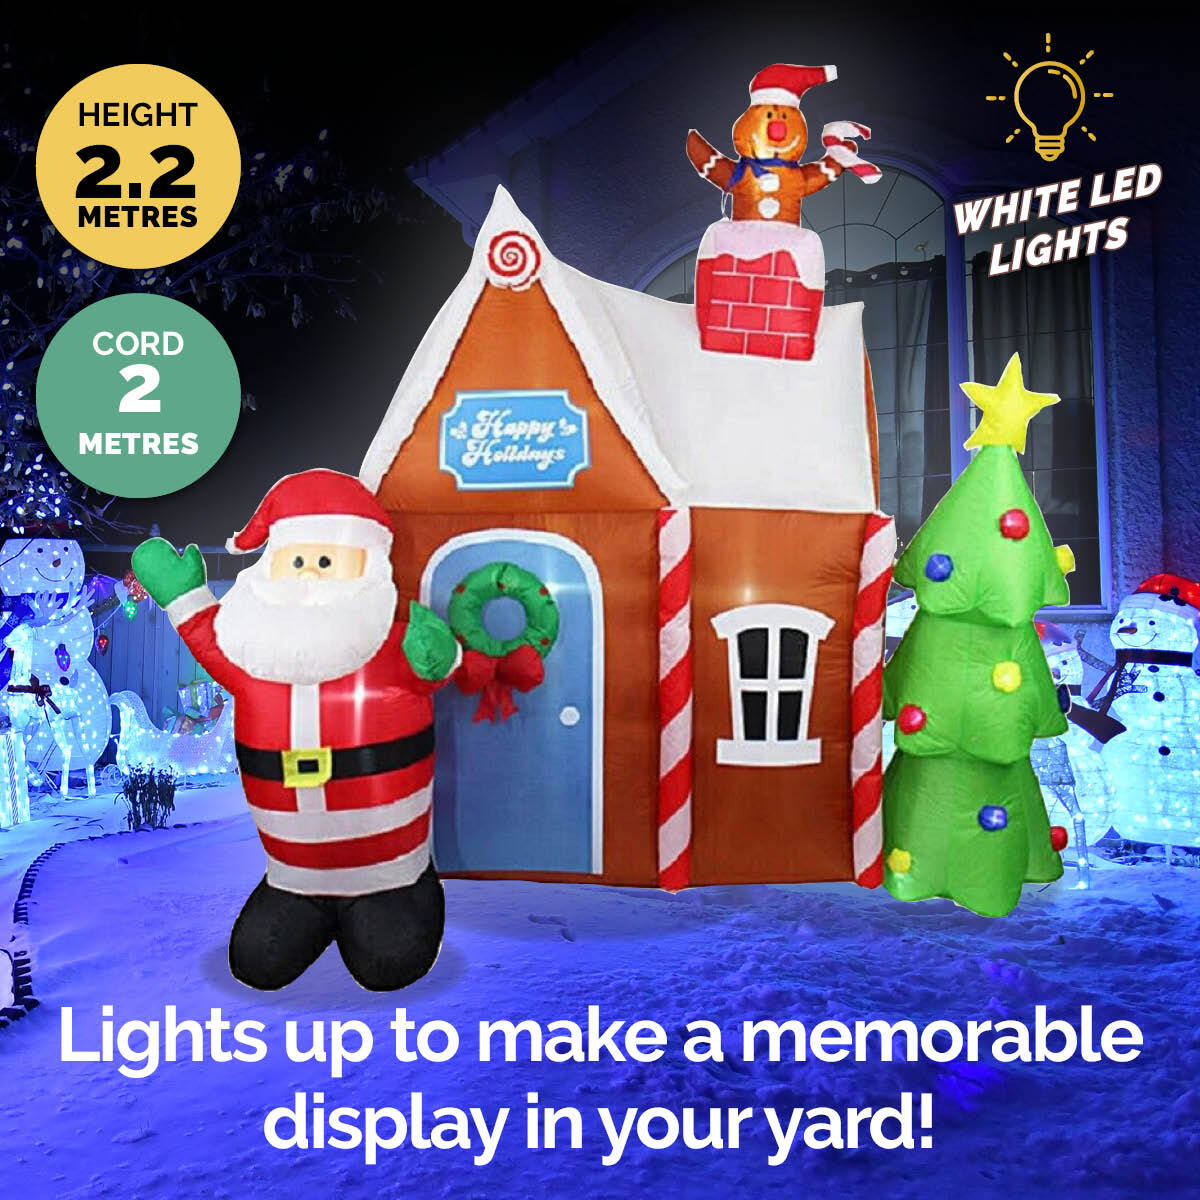 Christmas By Sas 1.8m Santa & Hot Air Balloon Self Inflating LED Lighting - Little Kids Business